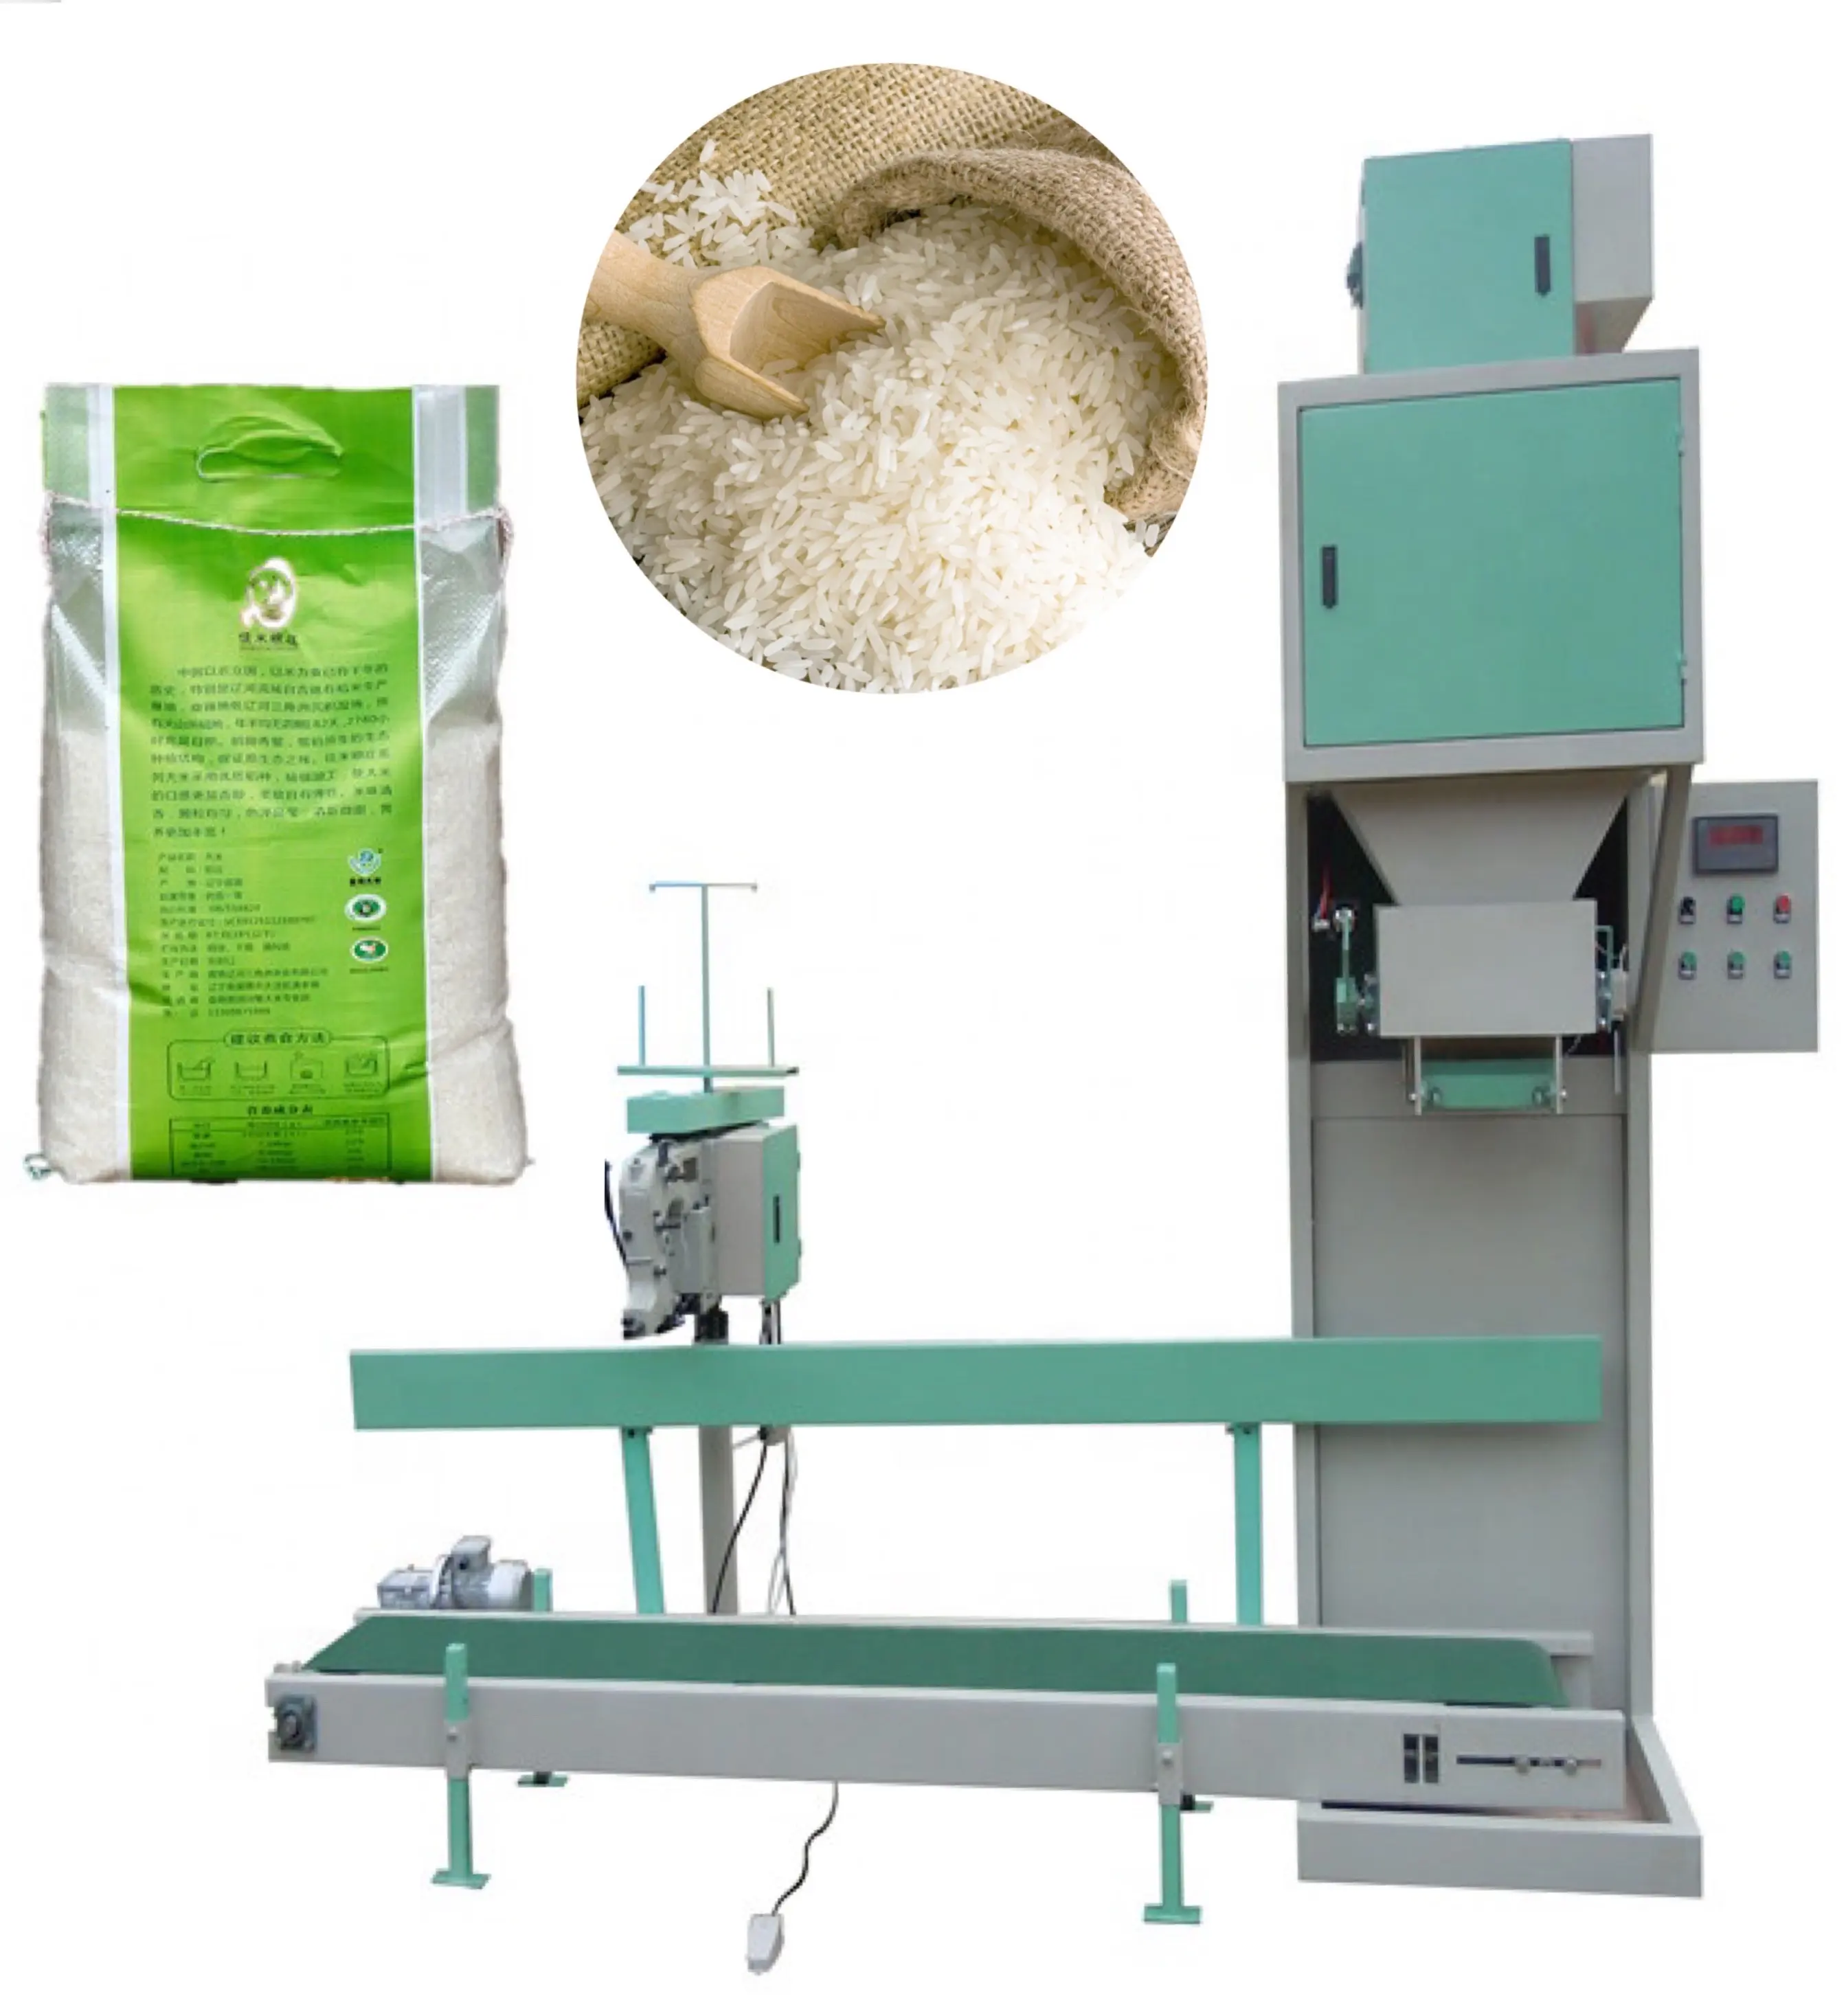 Maquinaria de molino de arroz, máquina de embalaje de arroz, se busca agente/distribuidor mundial